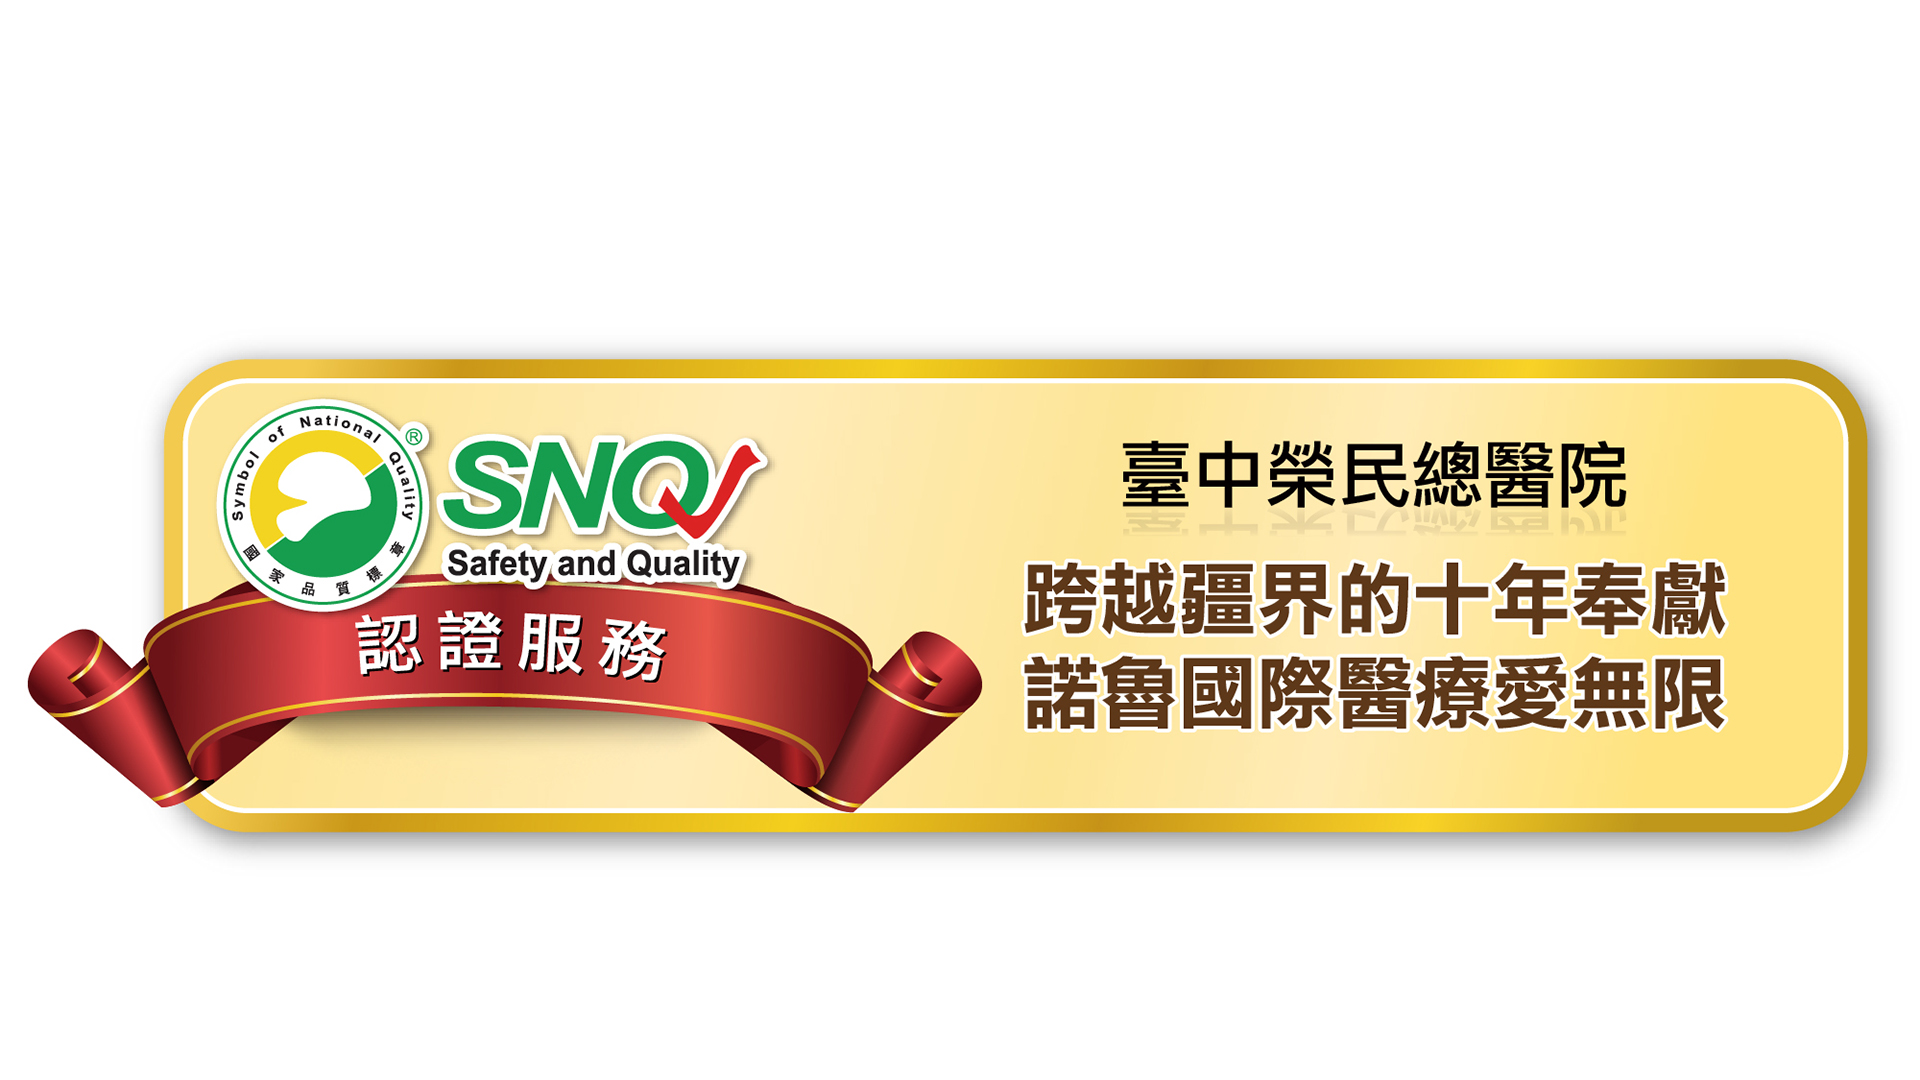 SNQ (logo)